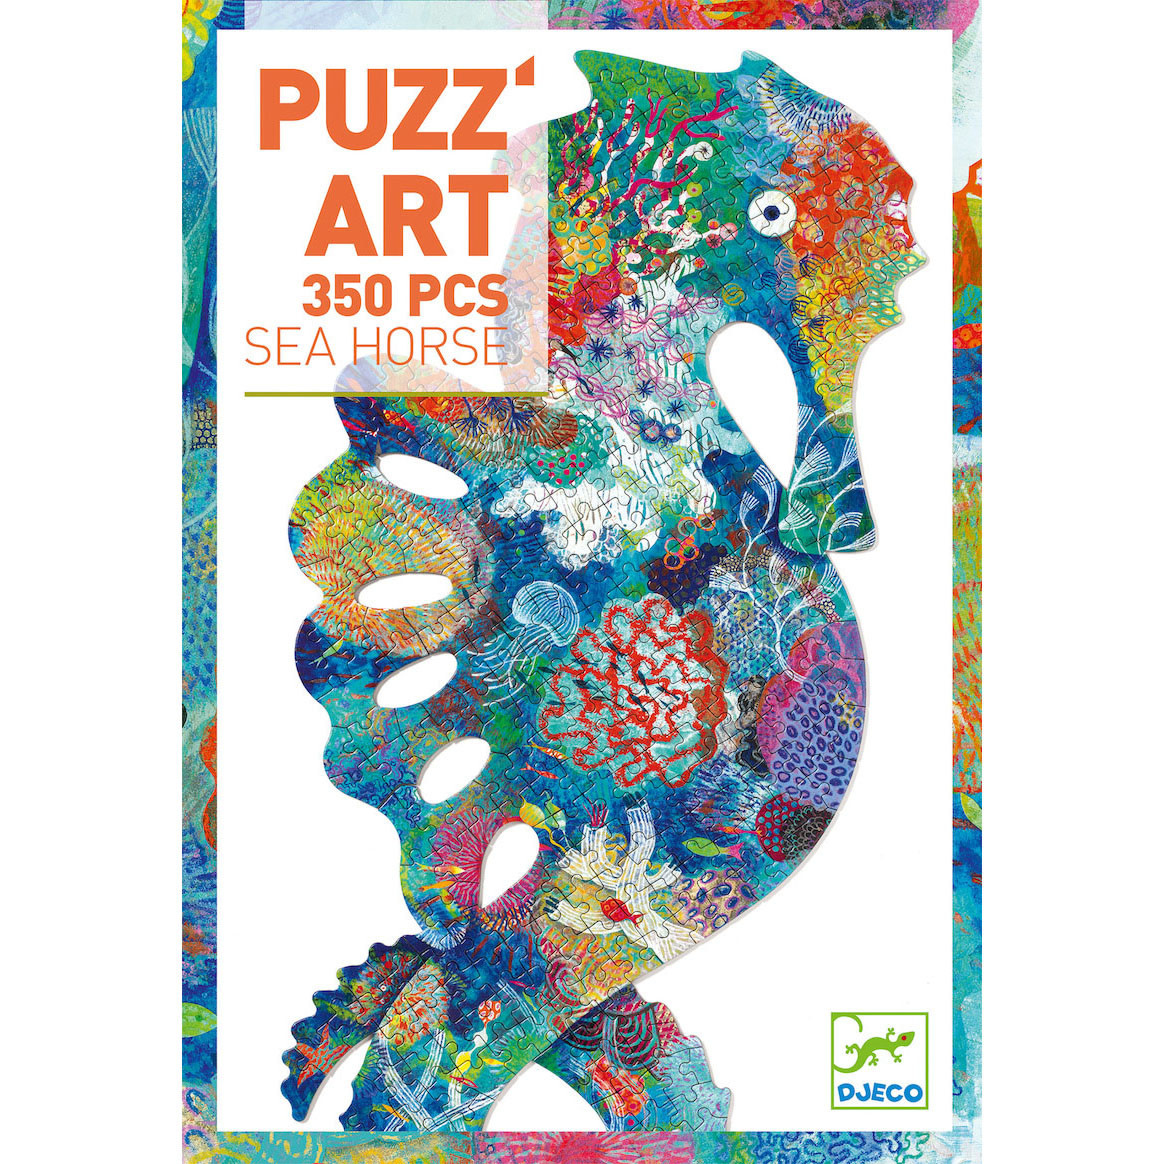 DJECO Puzz' Art Puzzles, Seahorse 350 Piece Puzzle